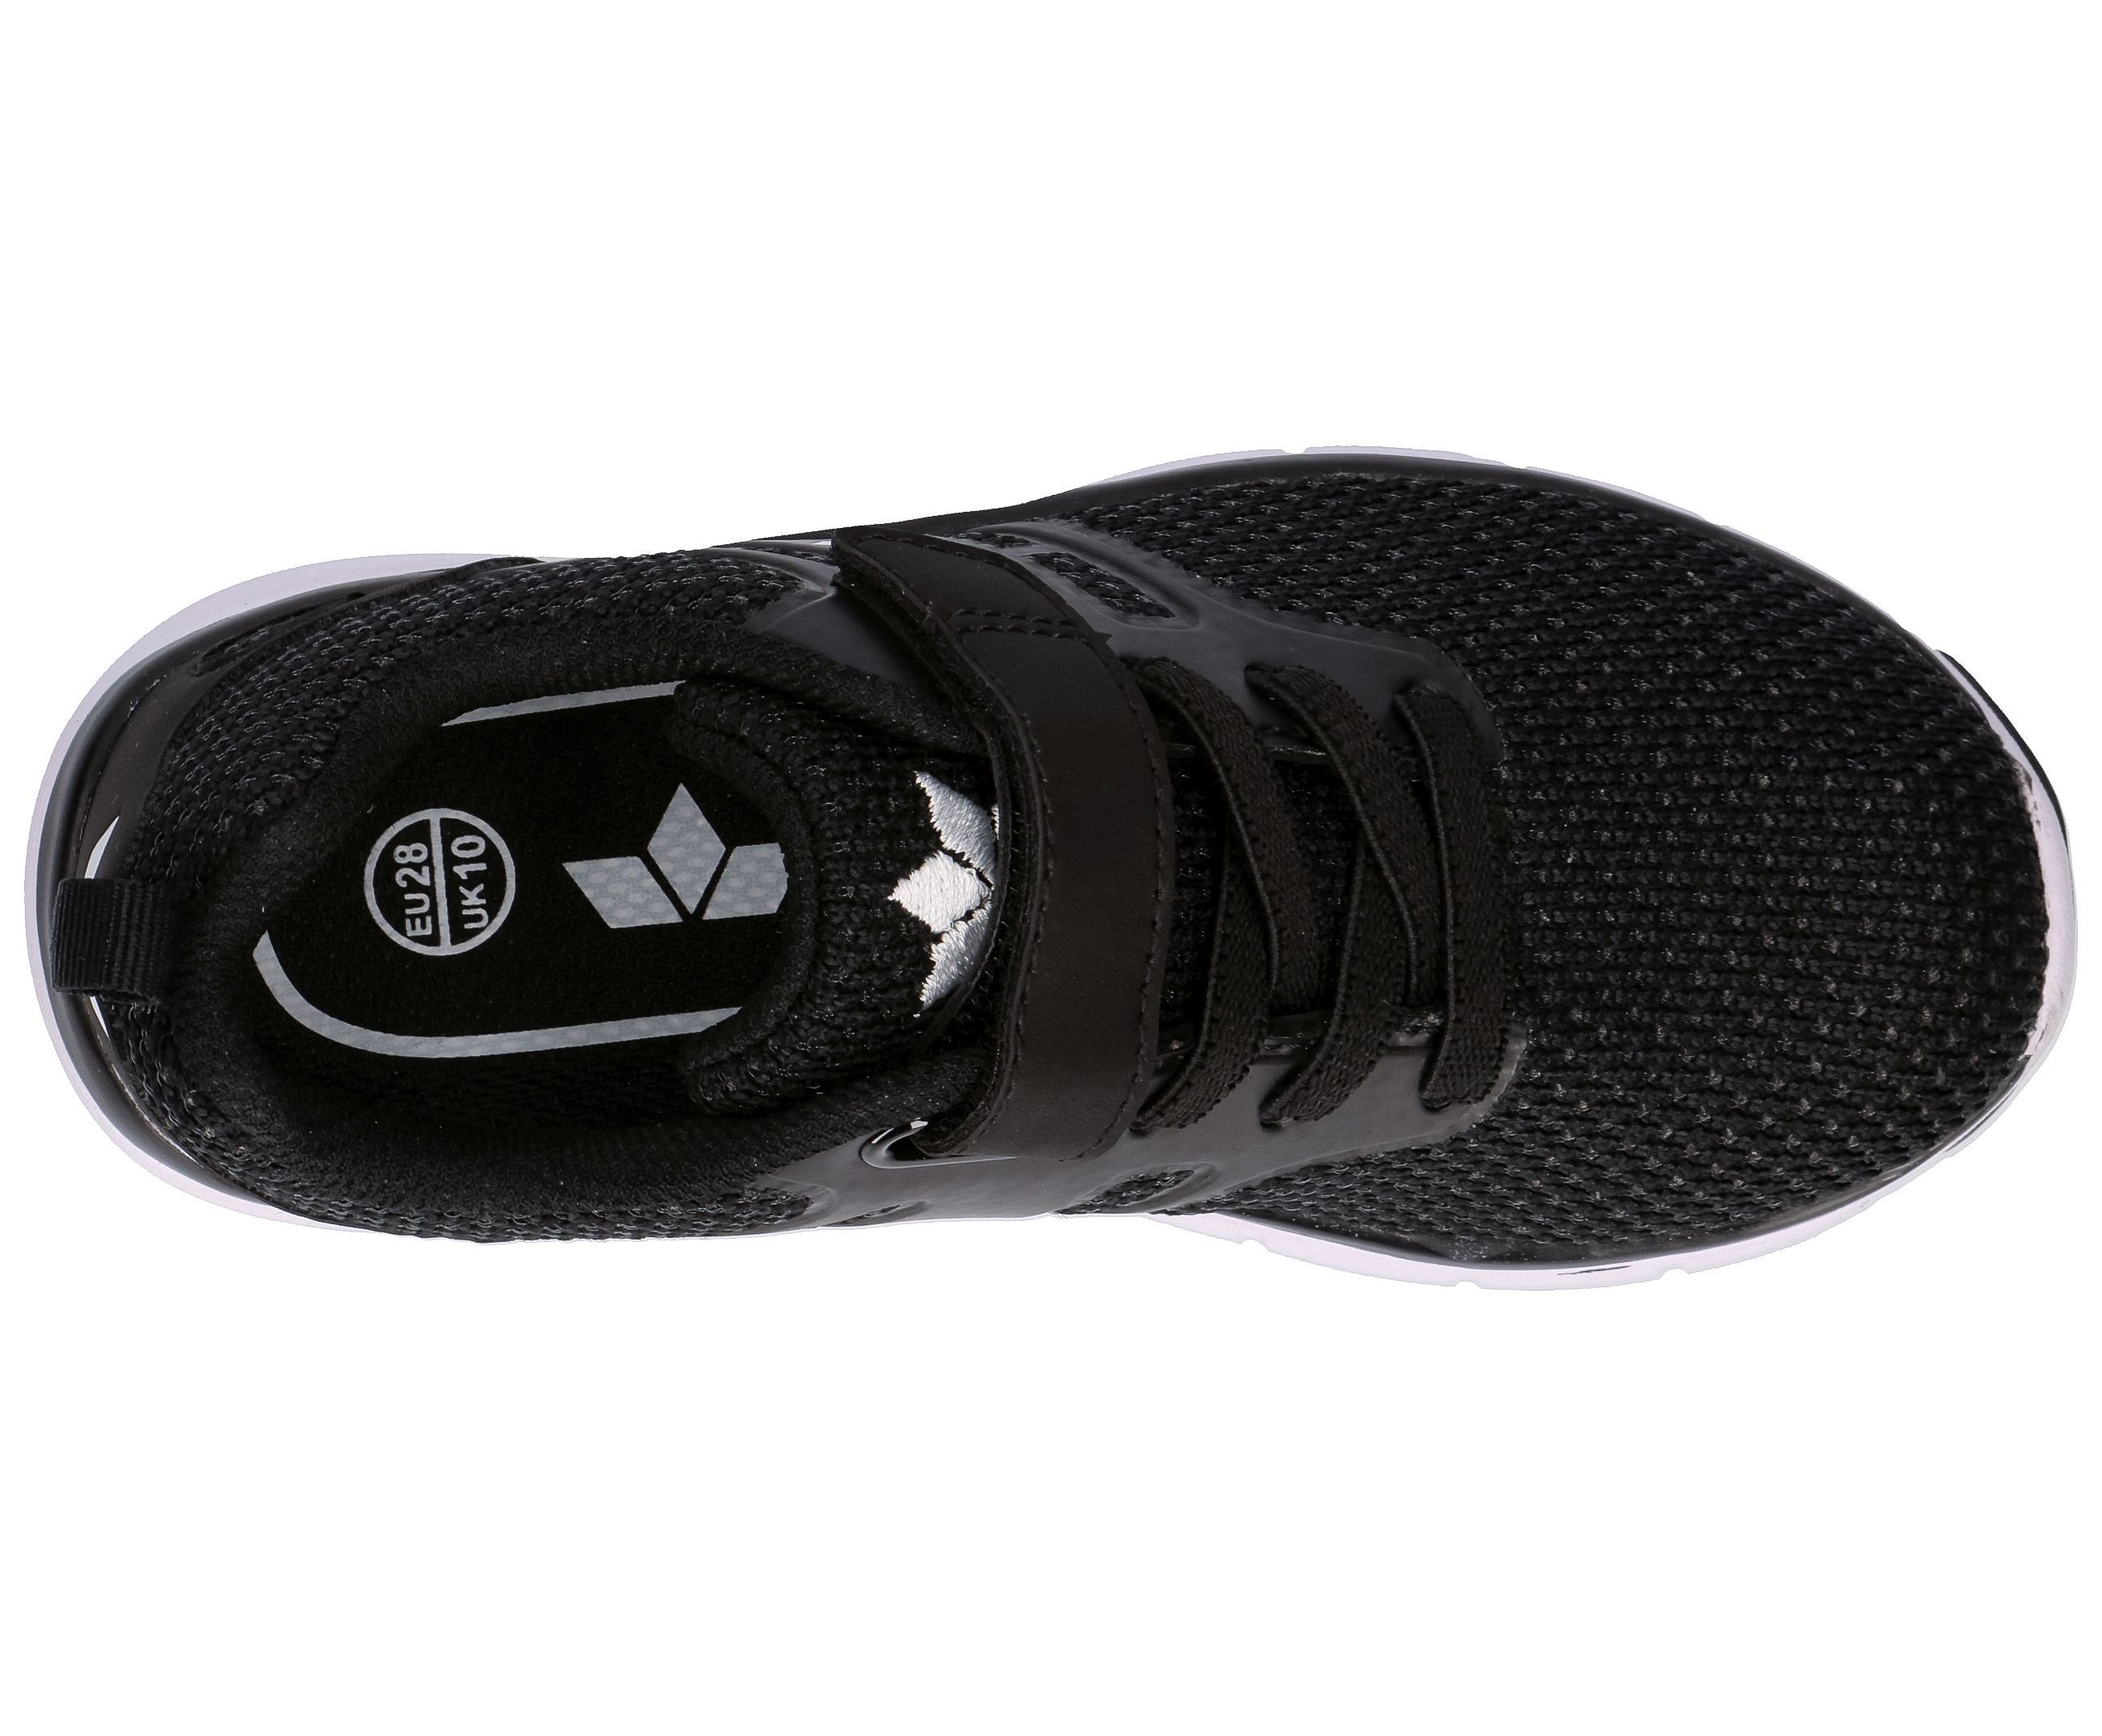 Lico Sneaker Freizeitschuh schwarz/weiss VS Bongo